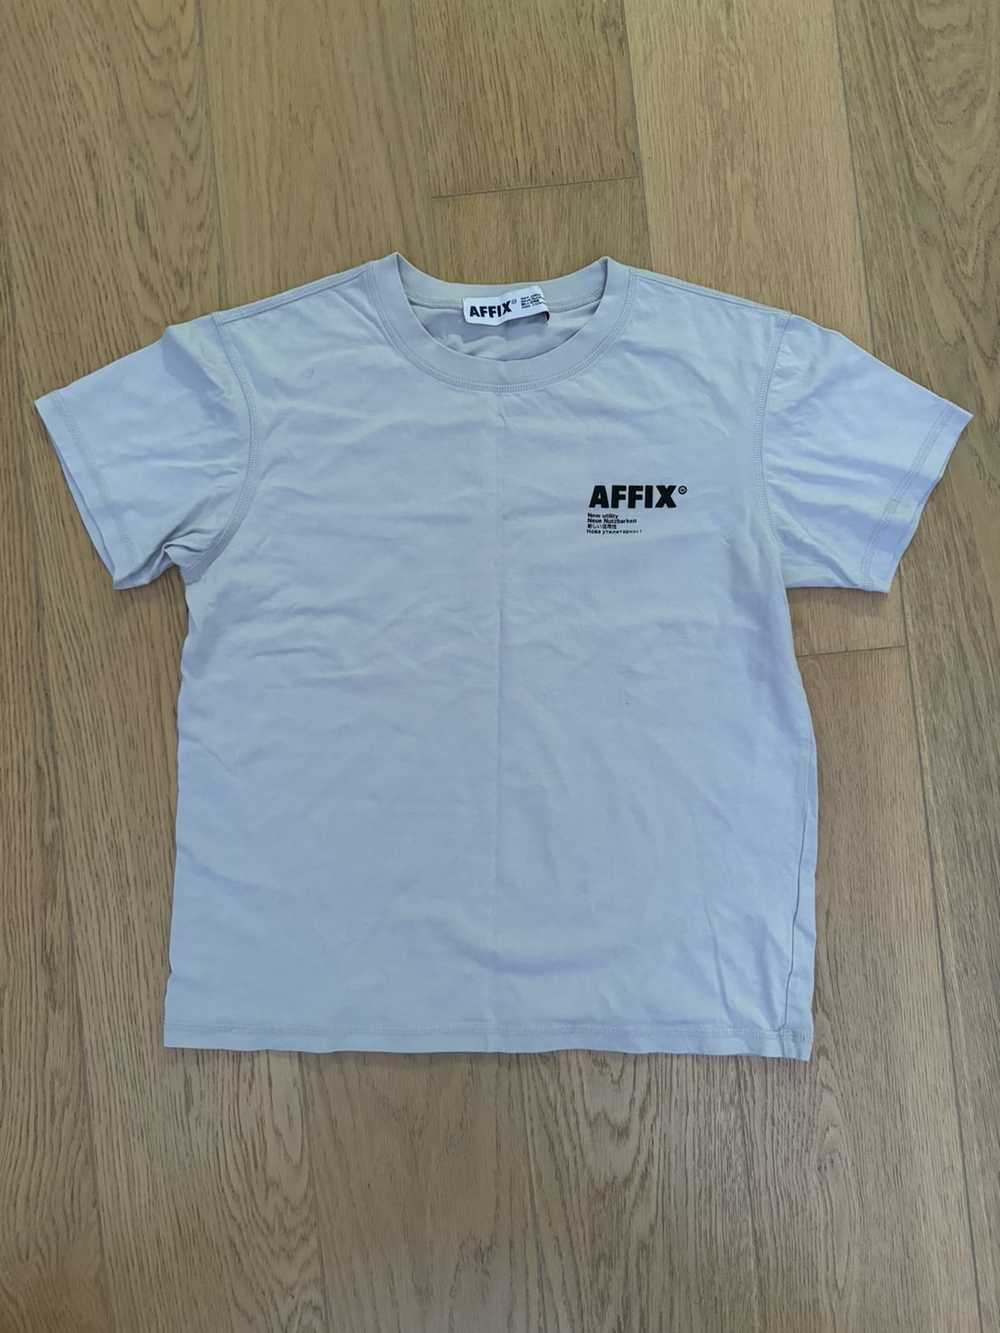 Affix Works Affix Light Blue T-Shirt - image 1